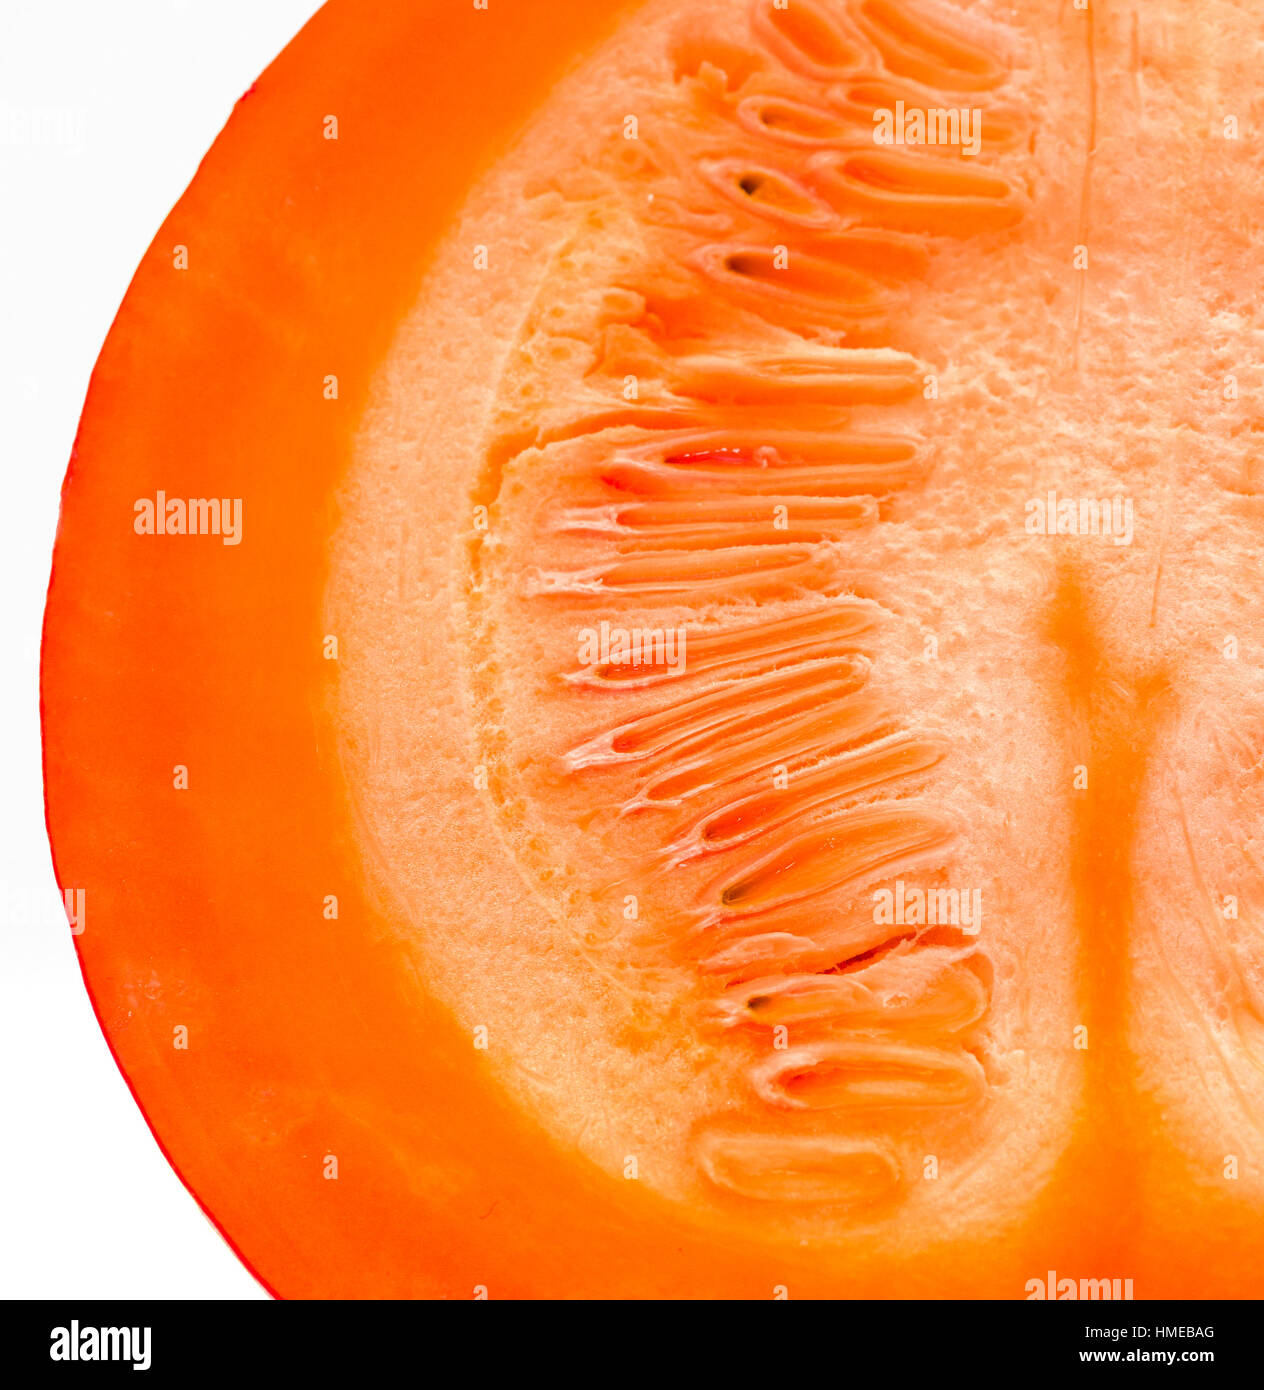 Die Innenseiten der Red Kuri squash - Orange Hokkaido Kürbis isoliert auf weiss. Uchiki Kuri Squash, japanische Squash oder Baby rot Hubbard Squash photographe Stockfoto